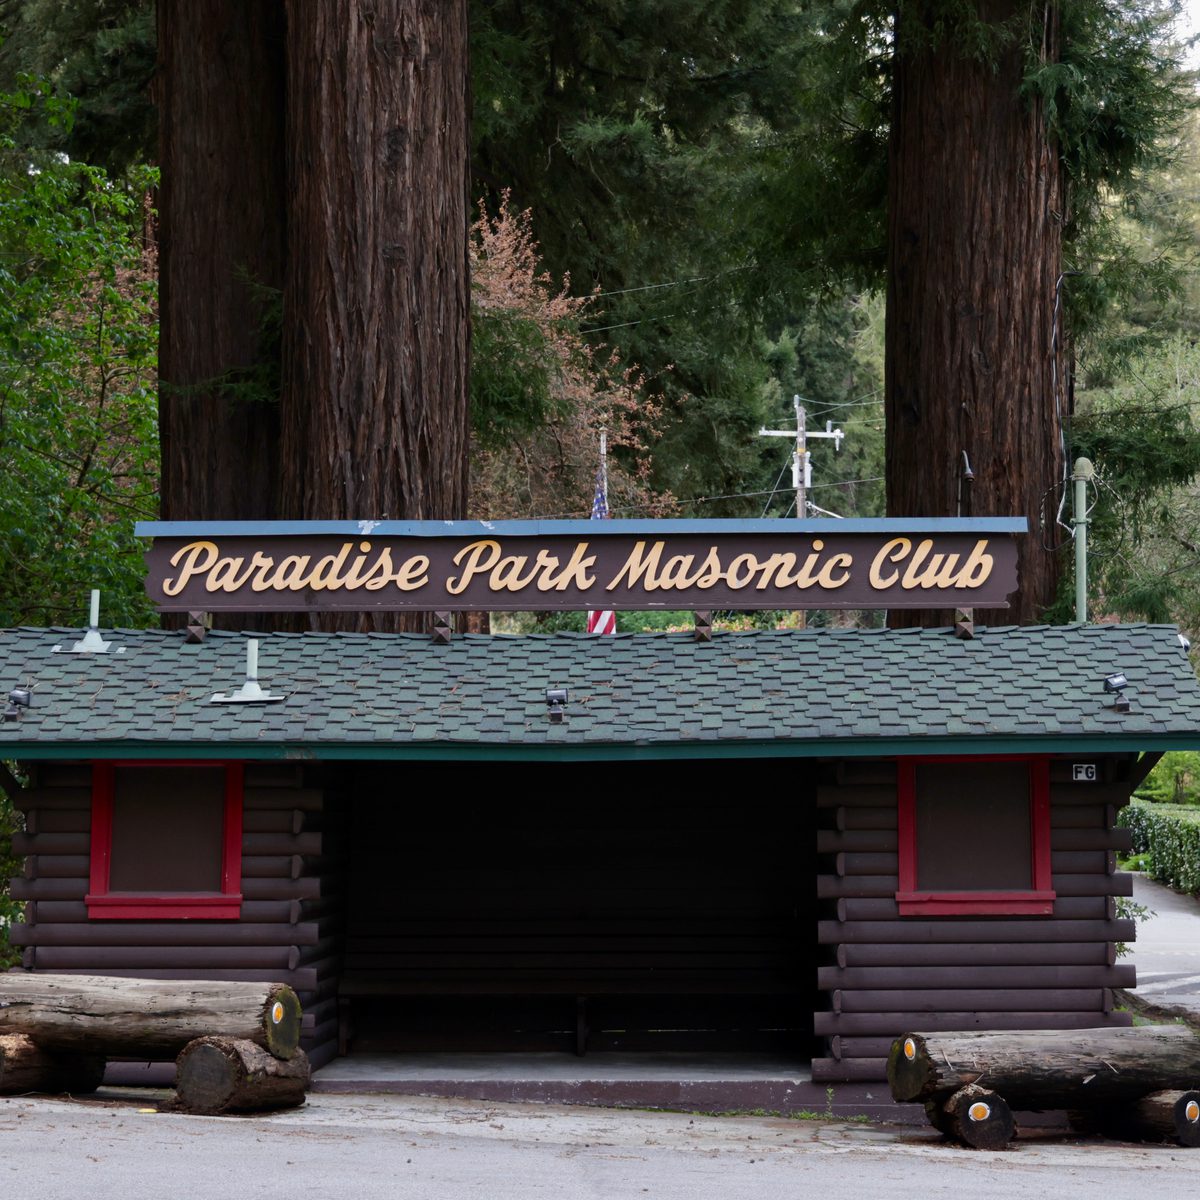 The entrance to the Paradise Park Masonic Club, a Masonic housing development outside Santa Cruz, California.